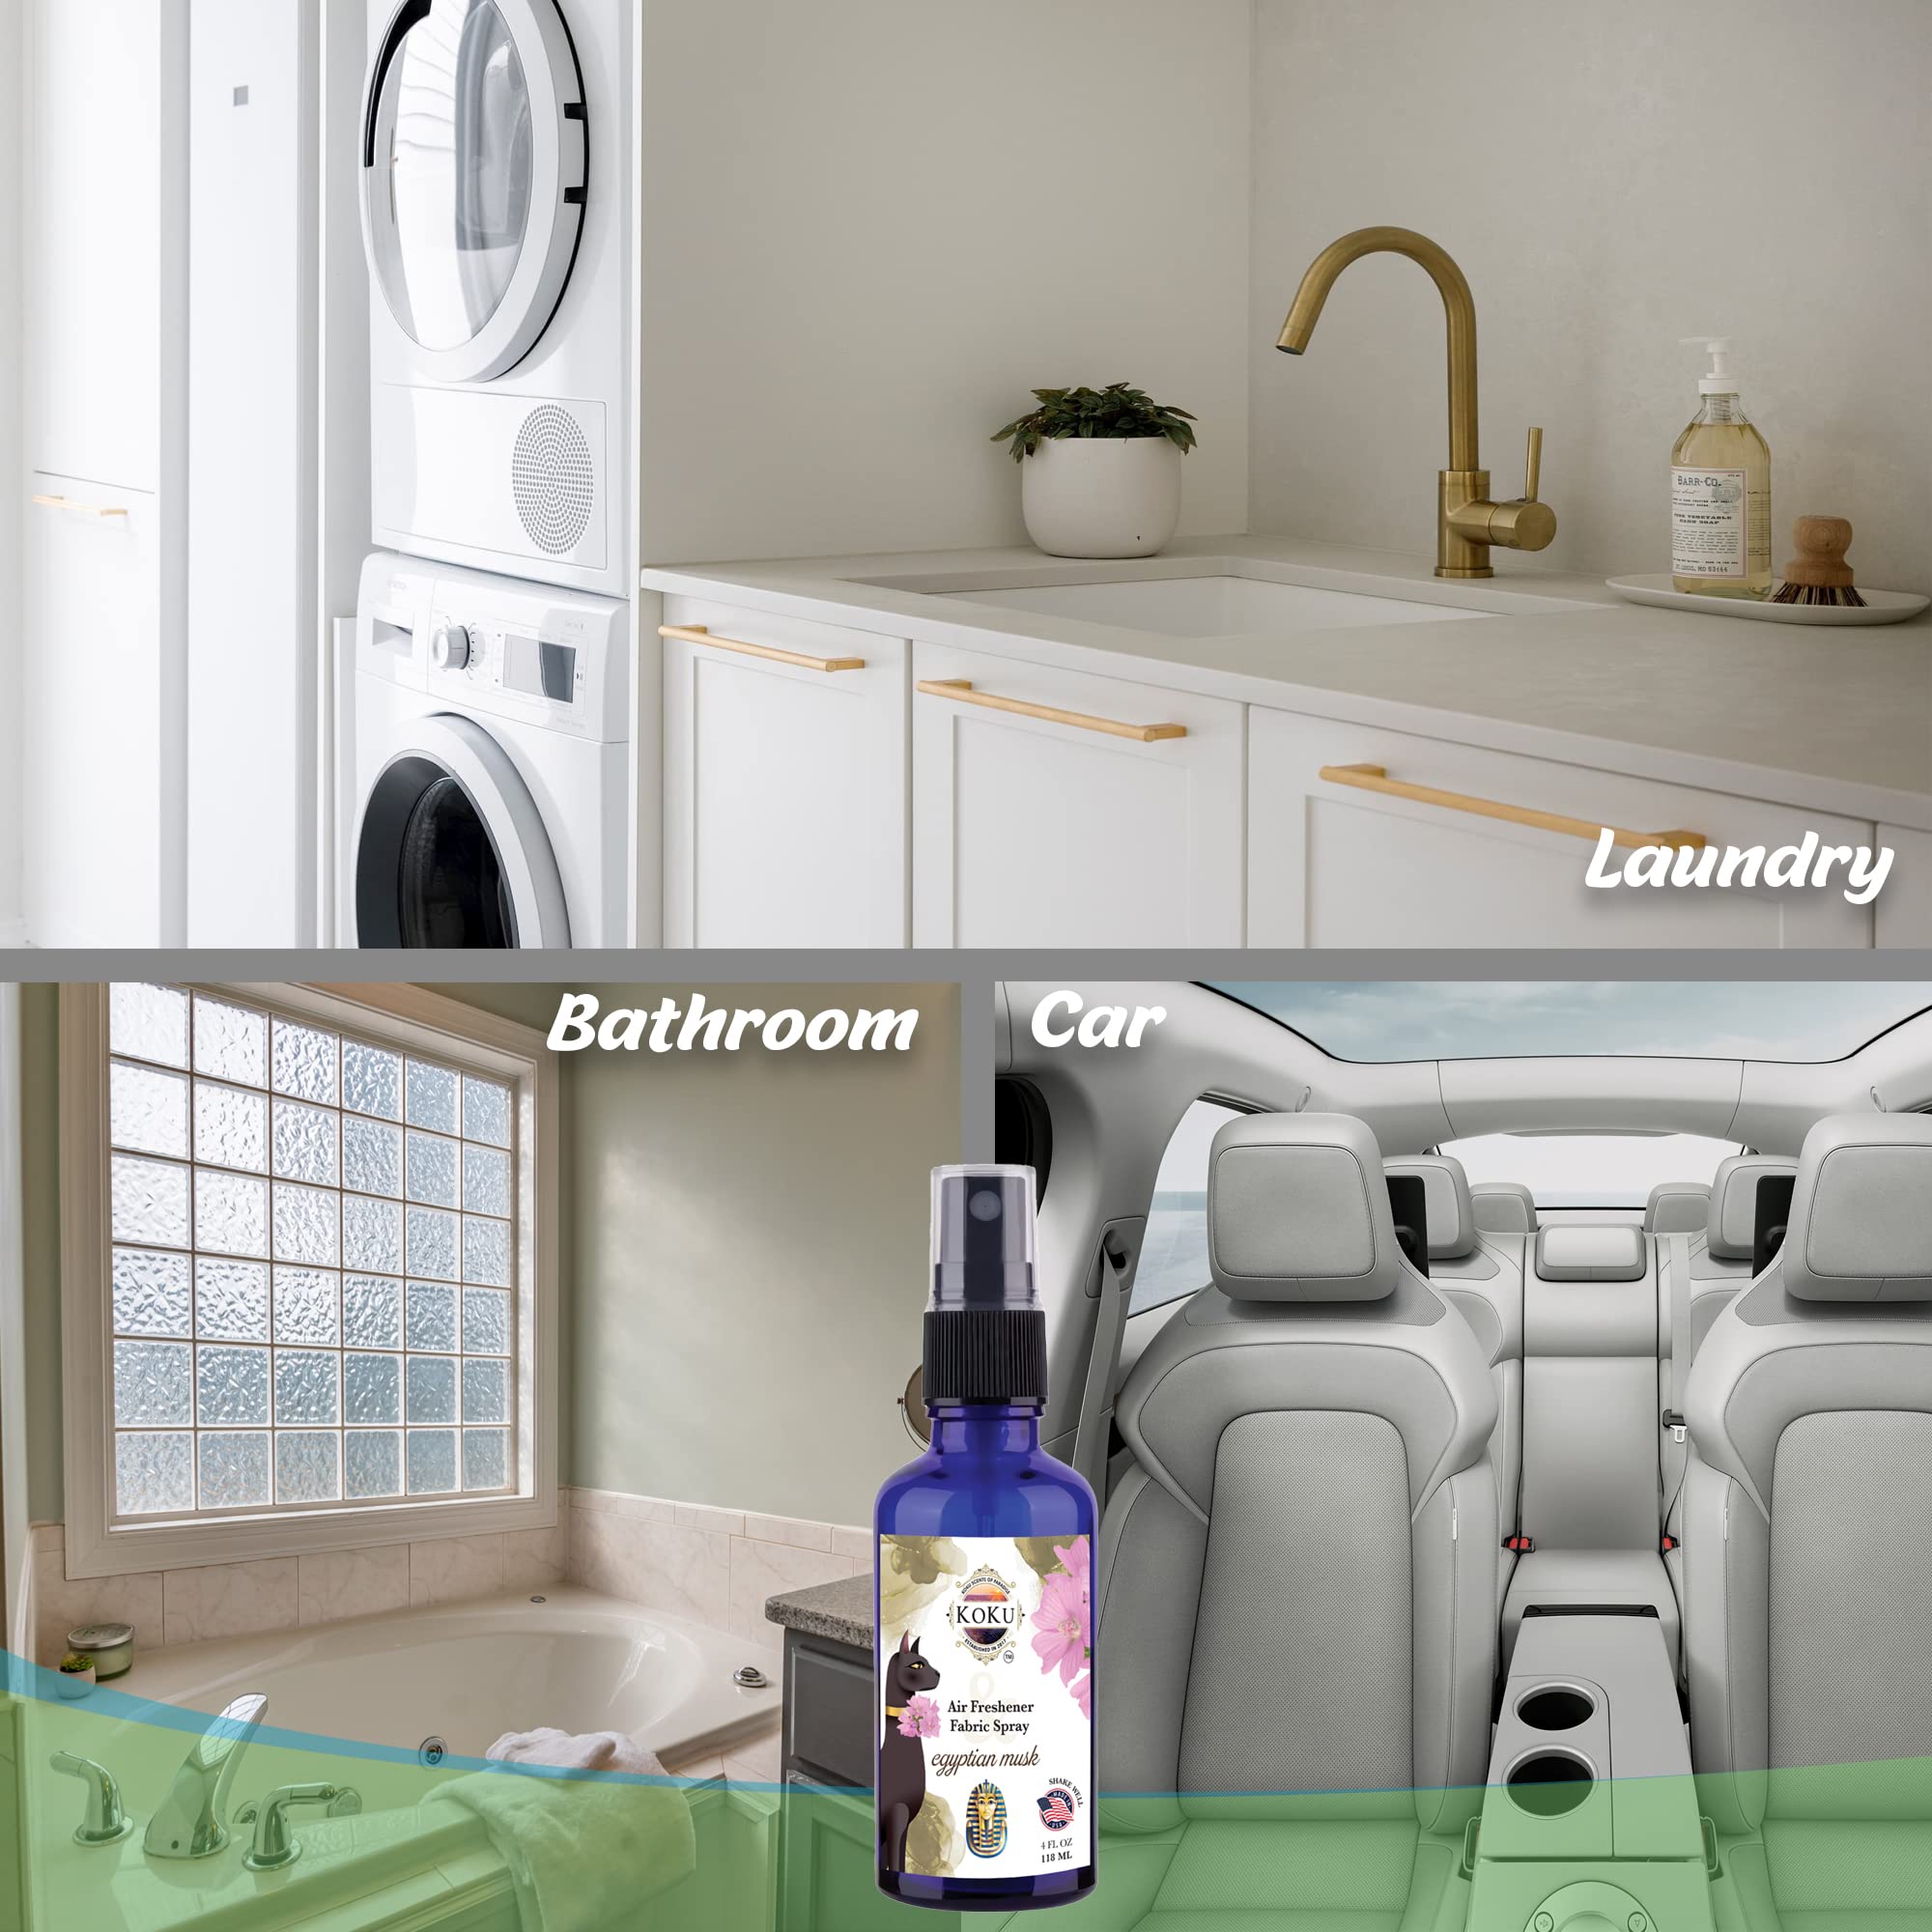 Egyptian Musk Air Freshener - Room Spray - Odor Eliminator - Deodorizer - Car Air Freshener - Home Spray - Linen Spray - Fabric Refresher - Non-Toxic - Alcohol Free - Made in USA (4 Oz)